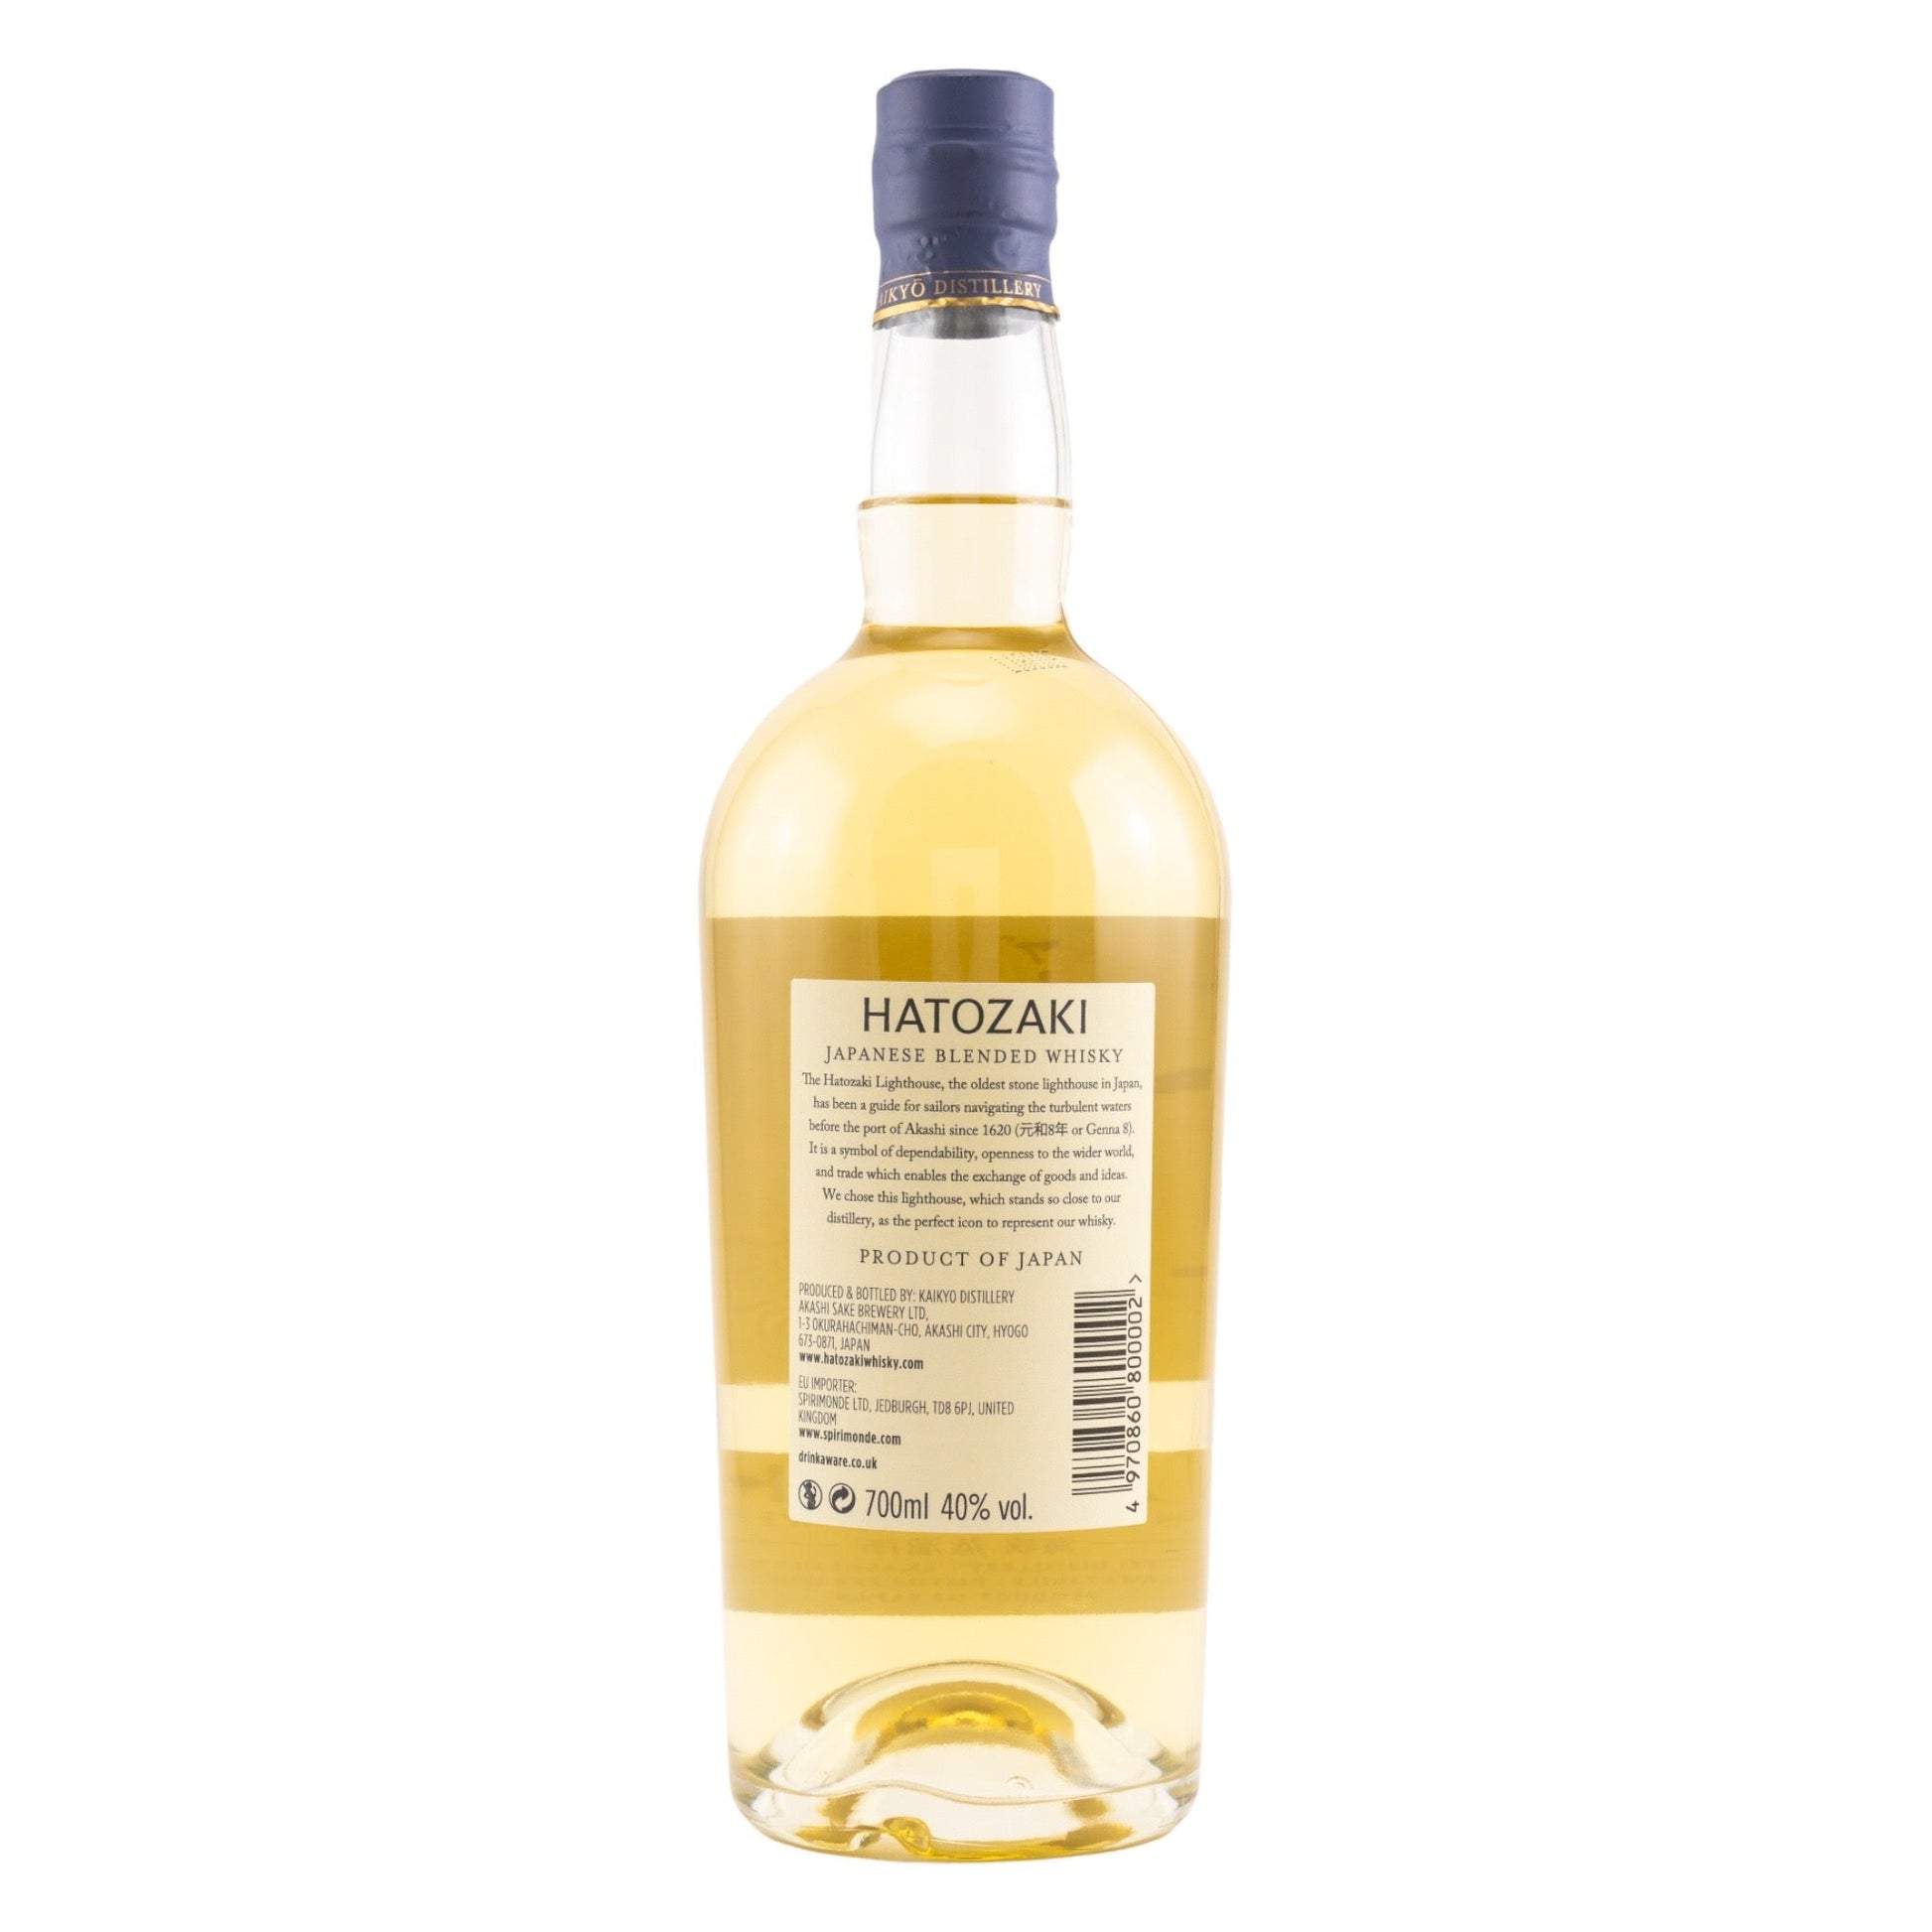 Hatozaki Blended Whisky - Online kaufen | getabottle.de – GET A BOTTLE